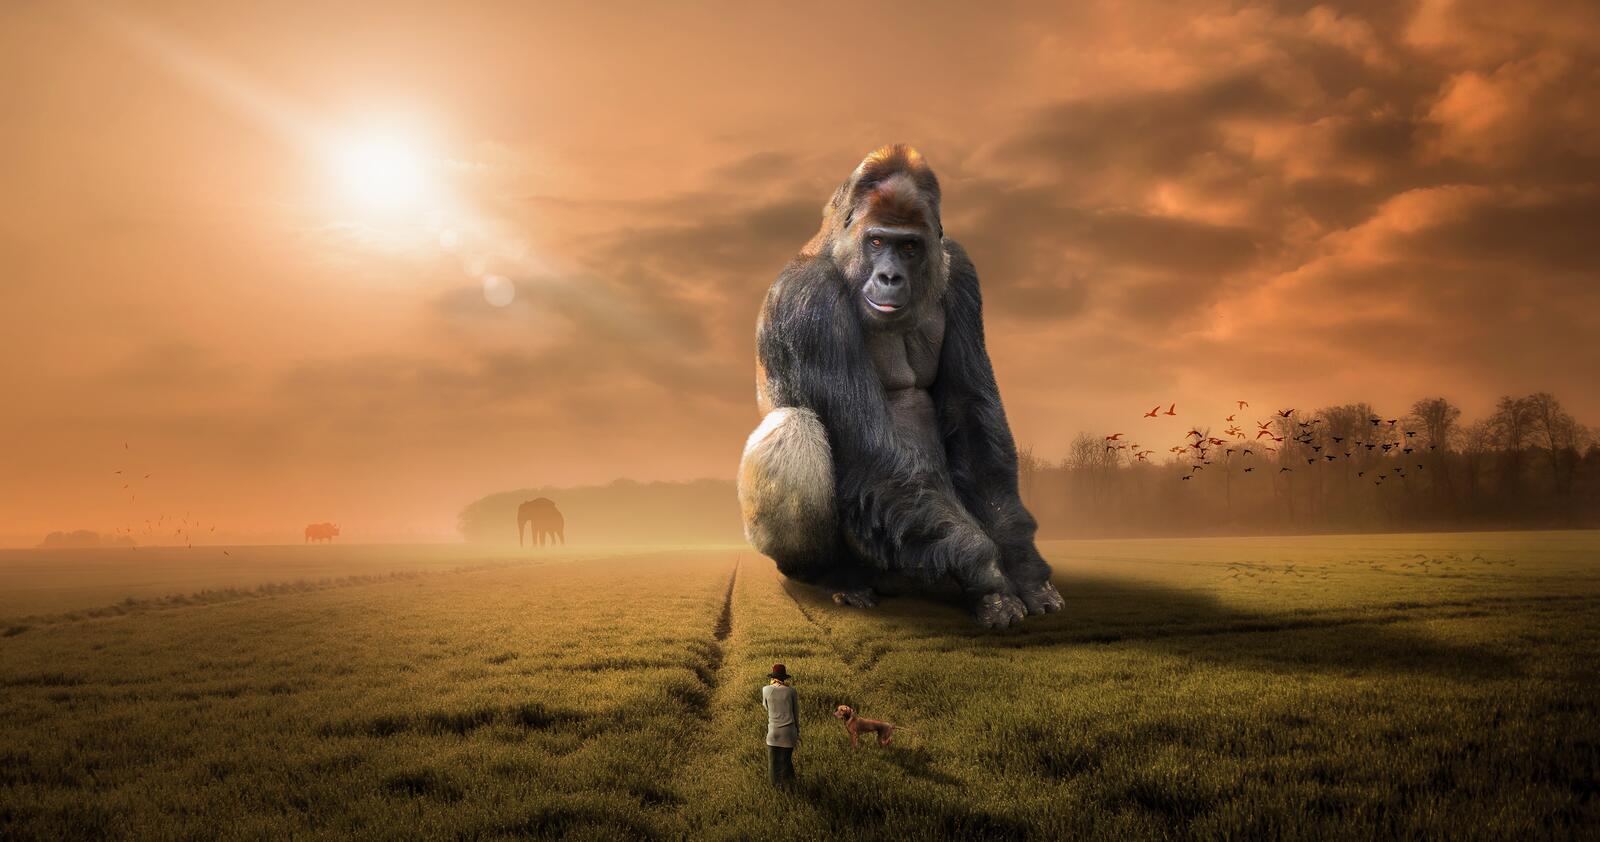 Wallpapers gorilla monkey primate on the desktop